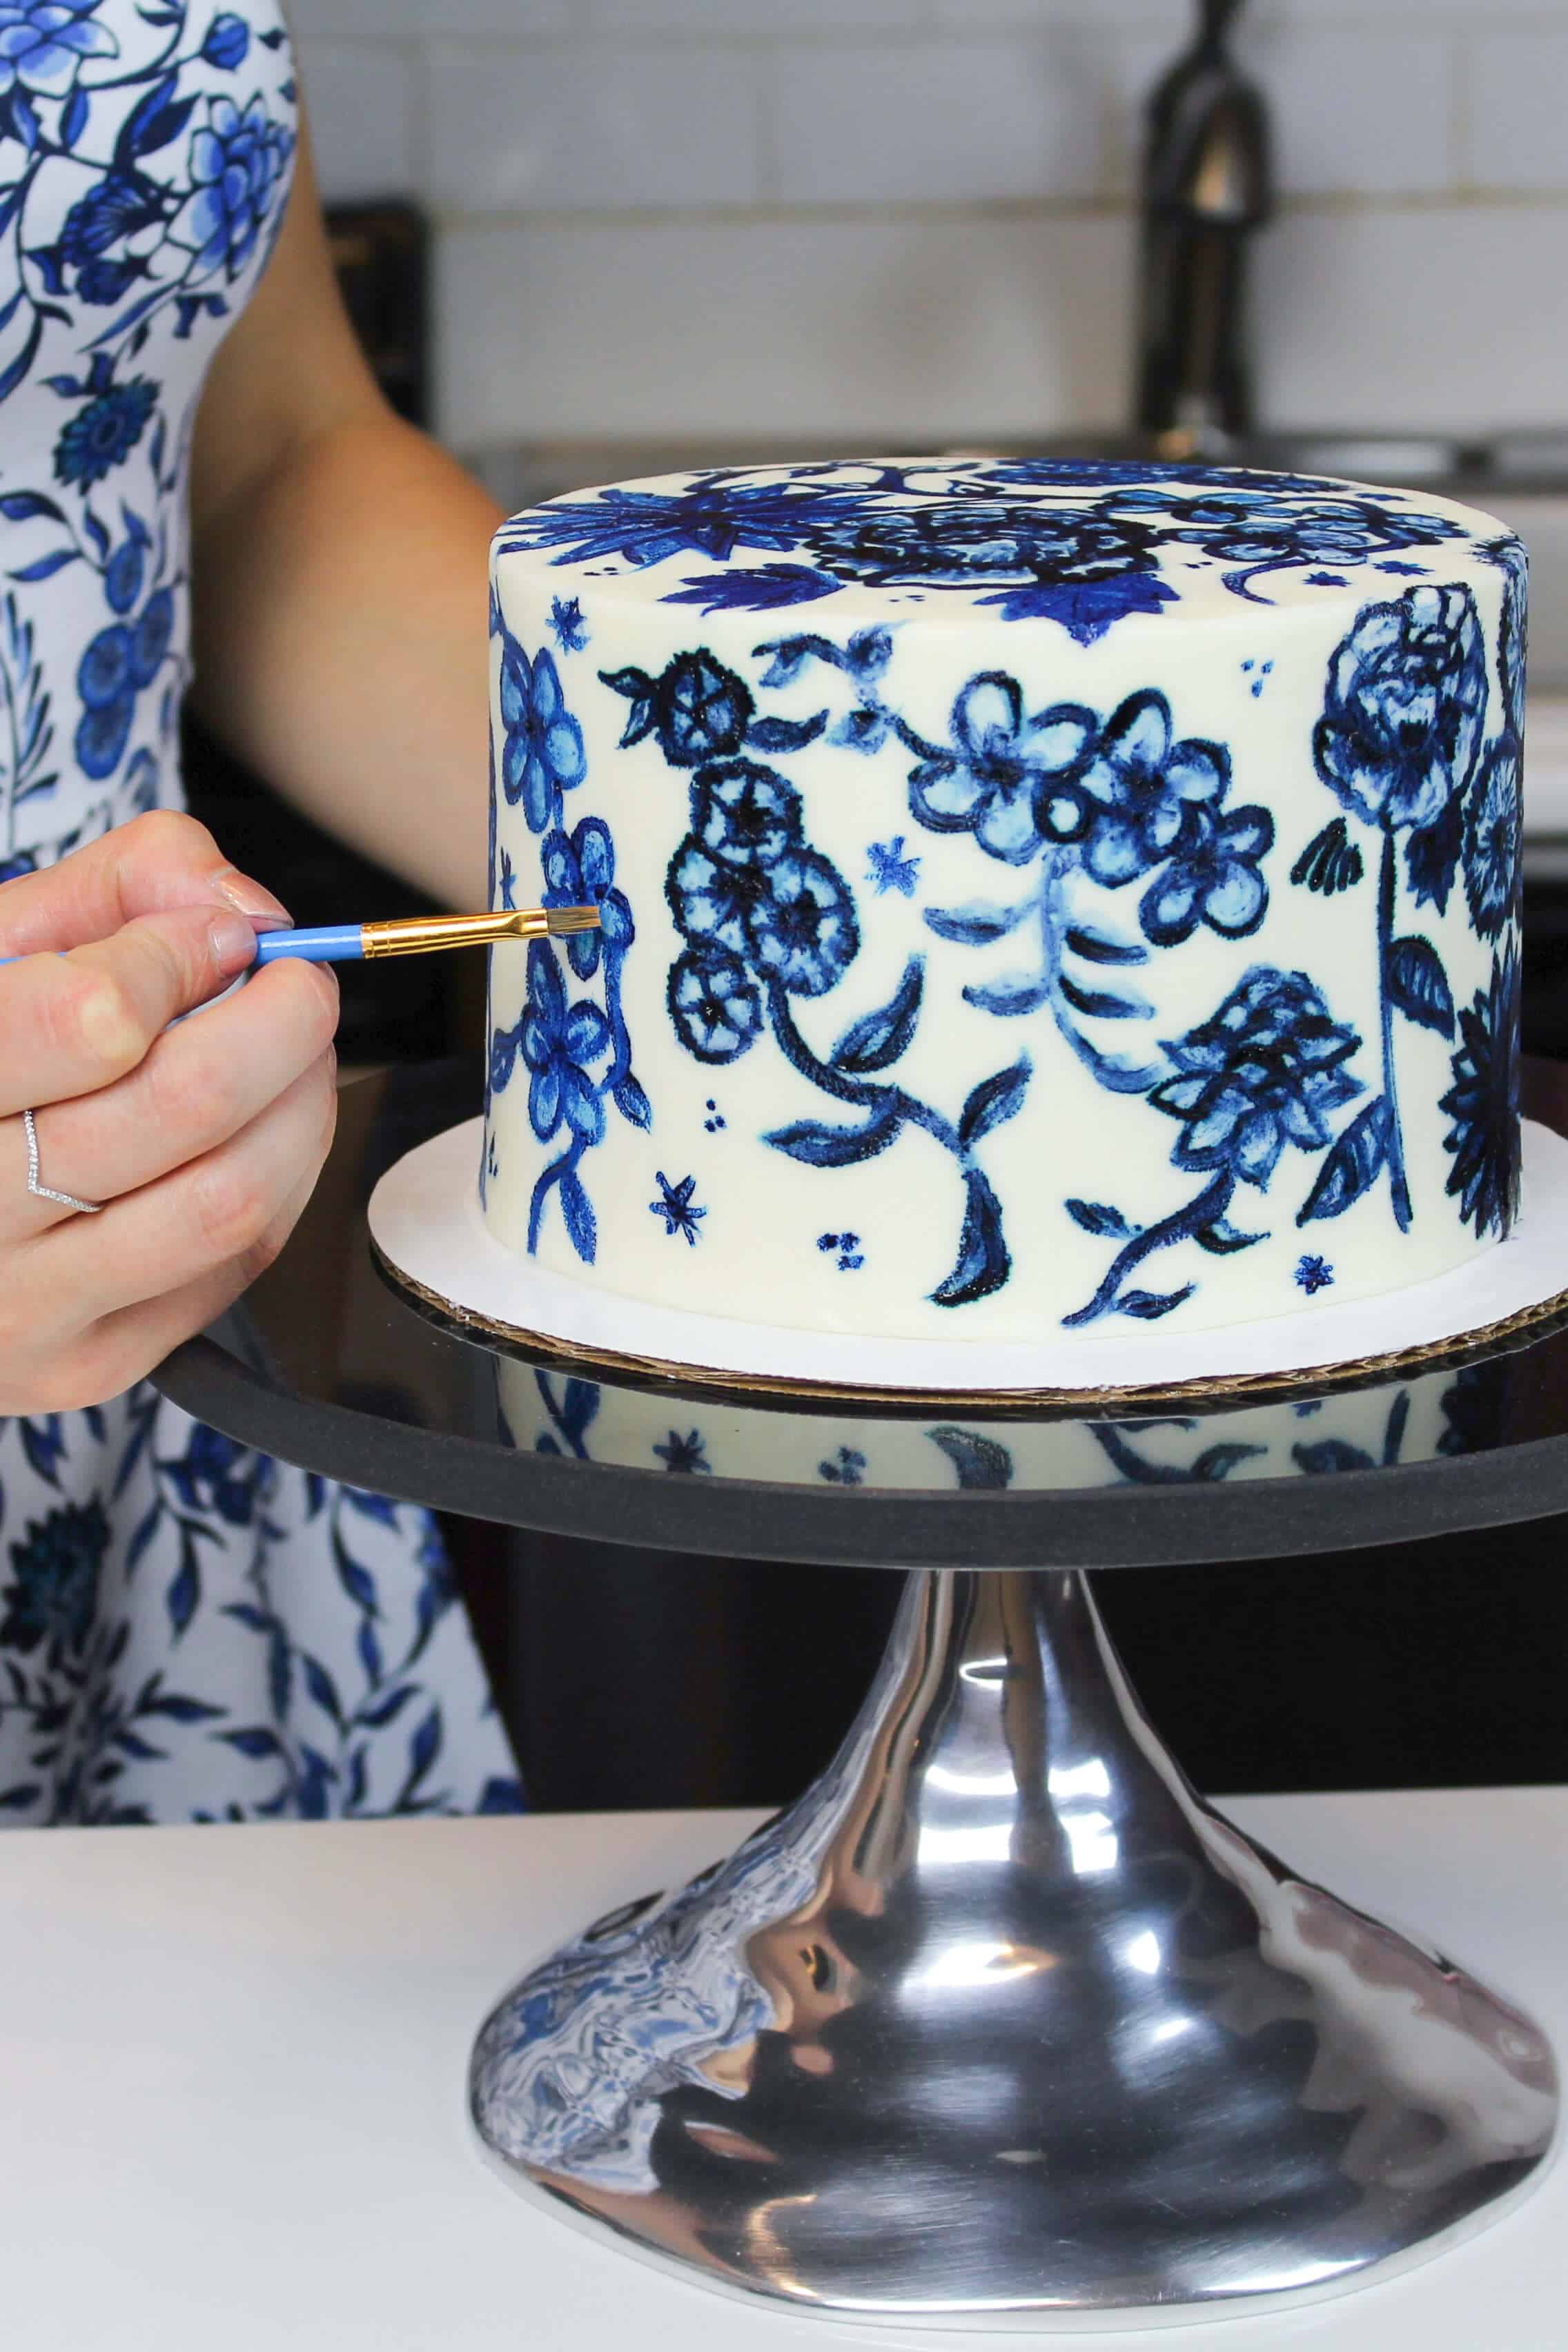 me painting blue cake-2